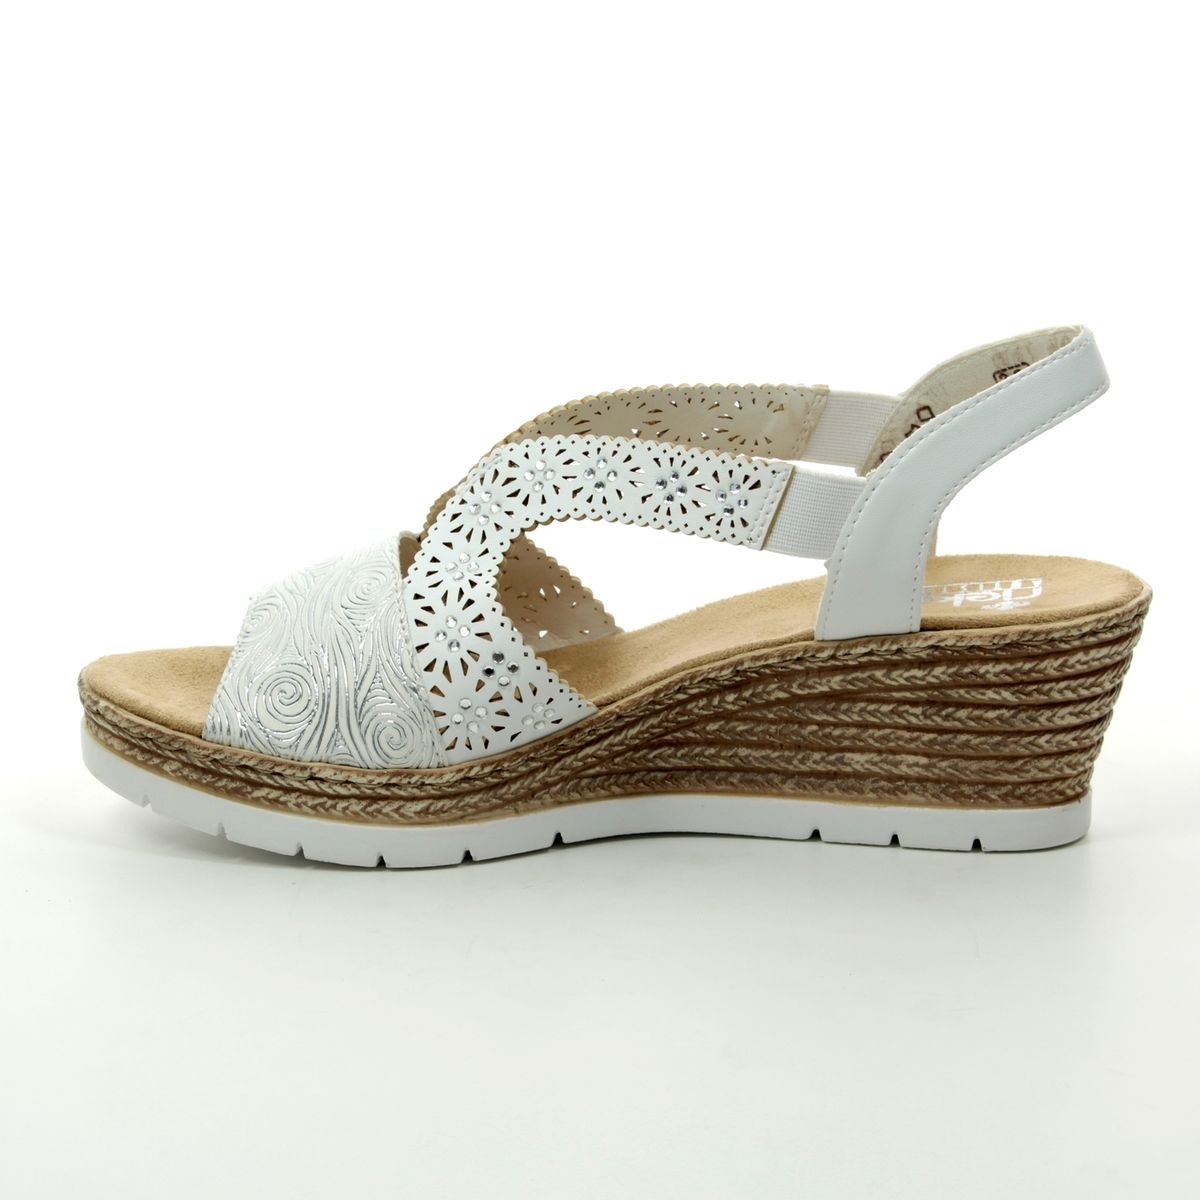 Rieker 61916-80 White-silver Wedge Sandals